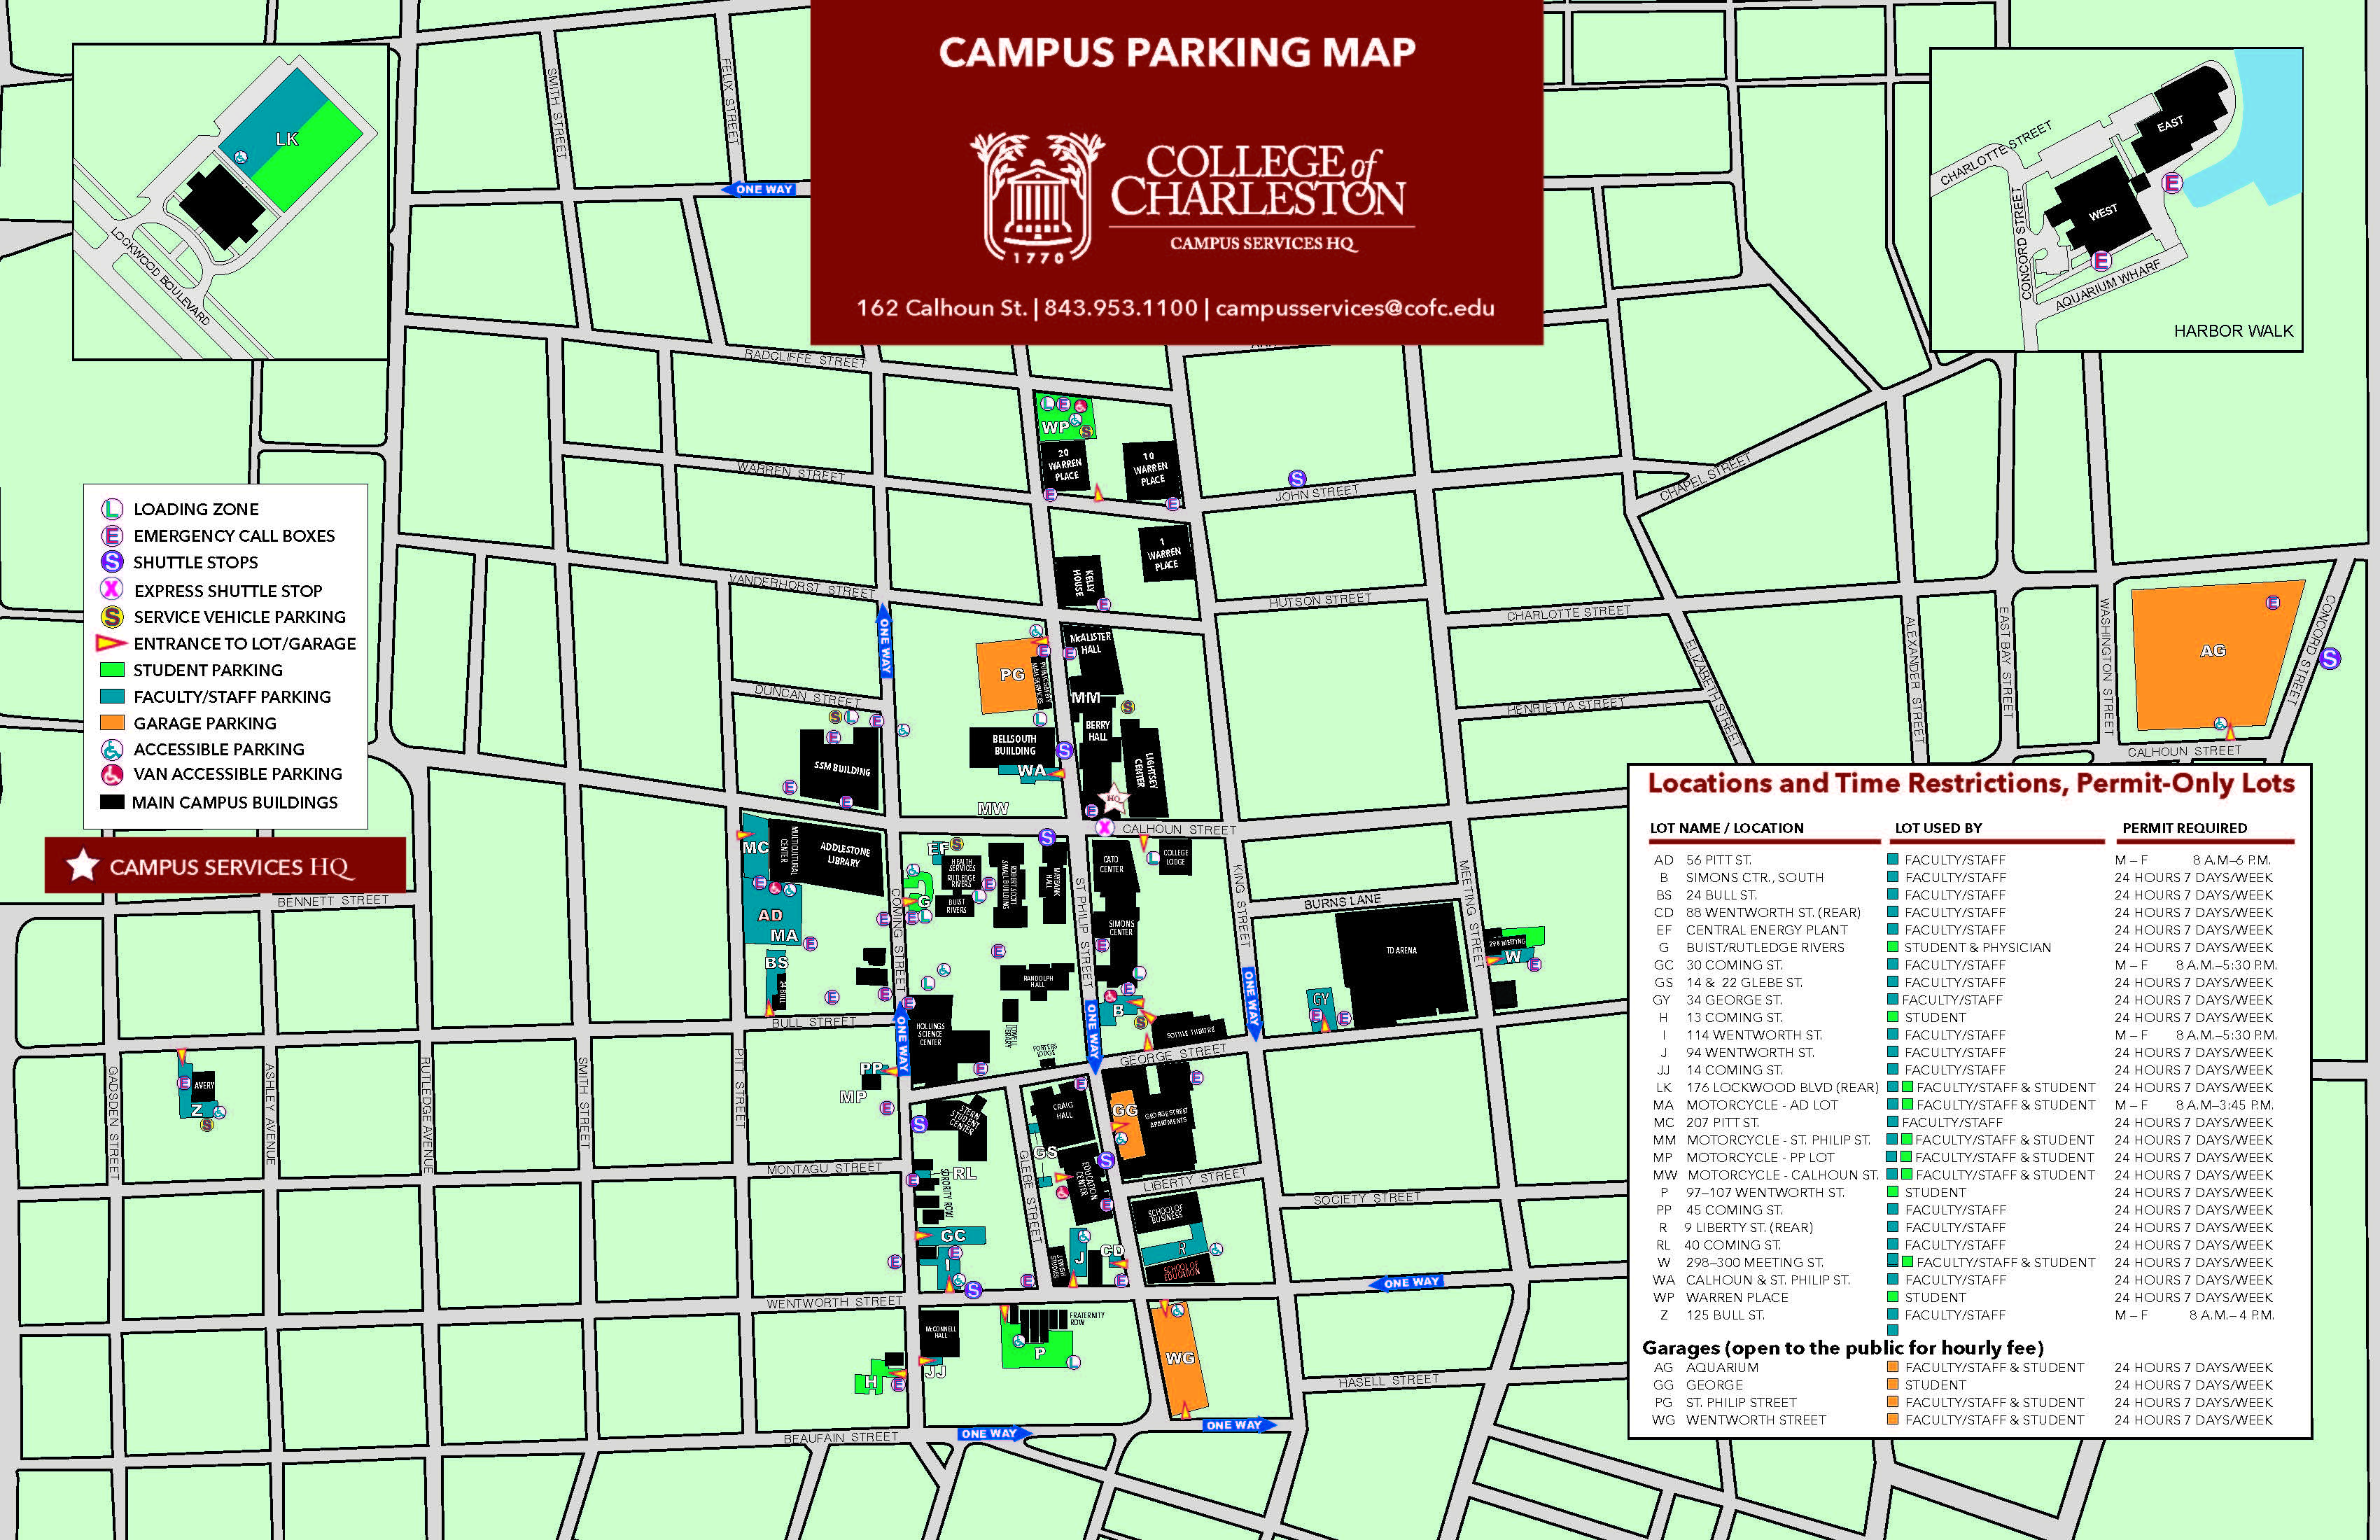 clickable button showing CofC's parking map